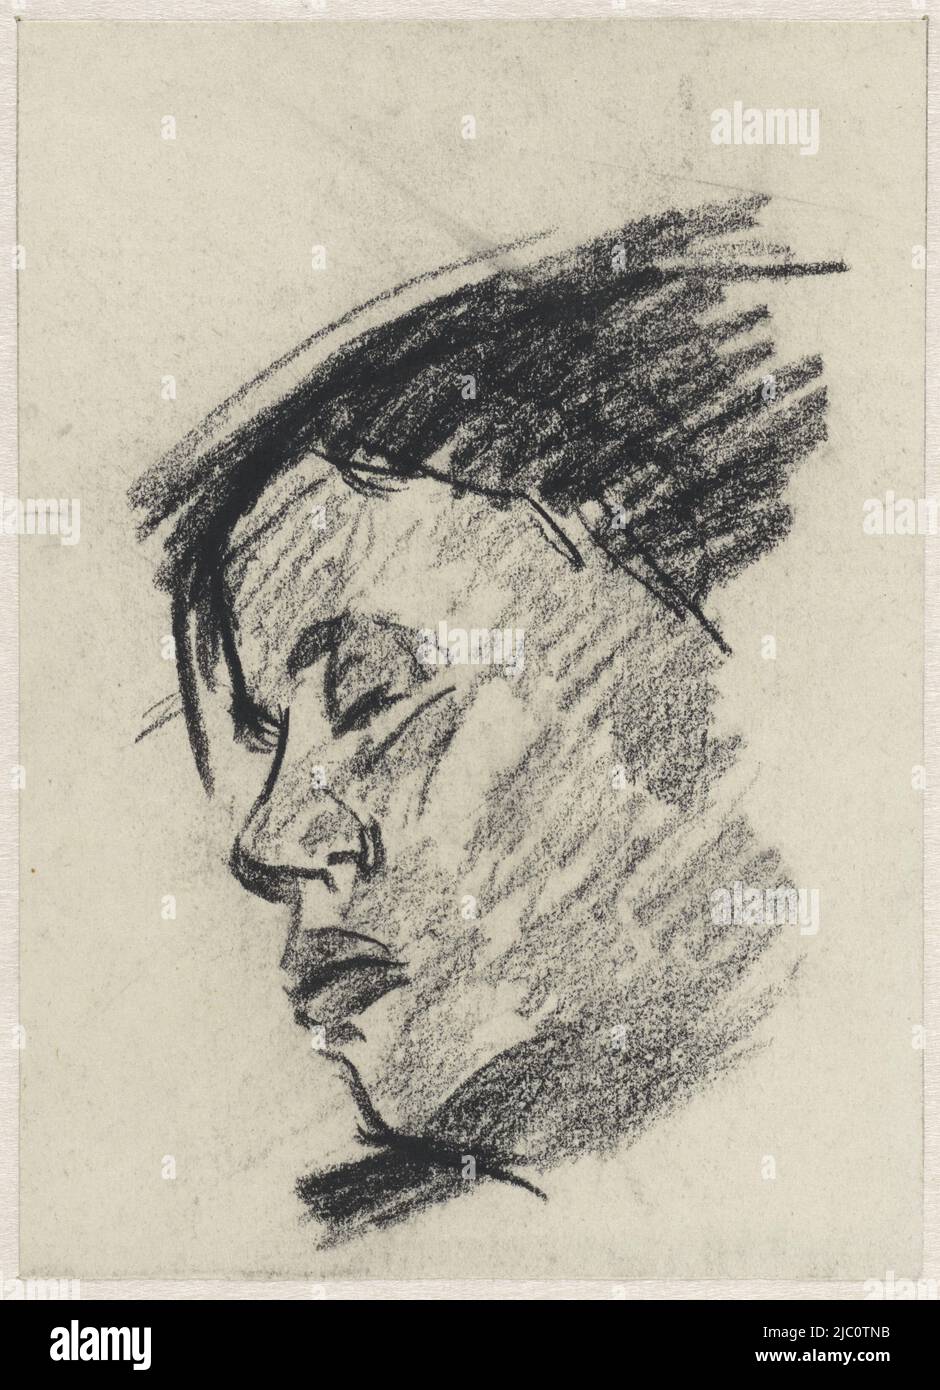 Testa di una donna addormentata, disegnatrice: Suze Robertson, 1865 - 1922, carta, h 152 mm x l 109 mm Foto Stock